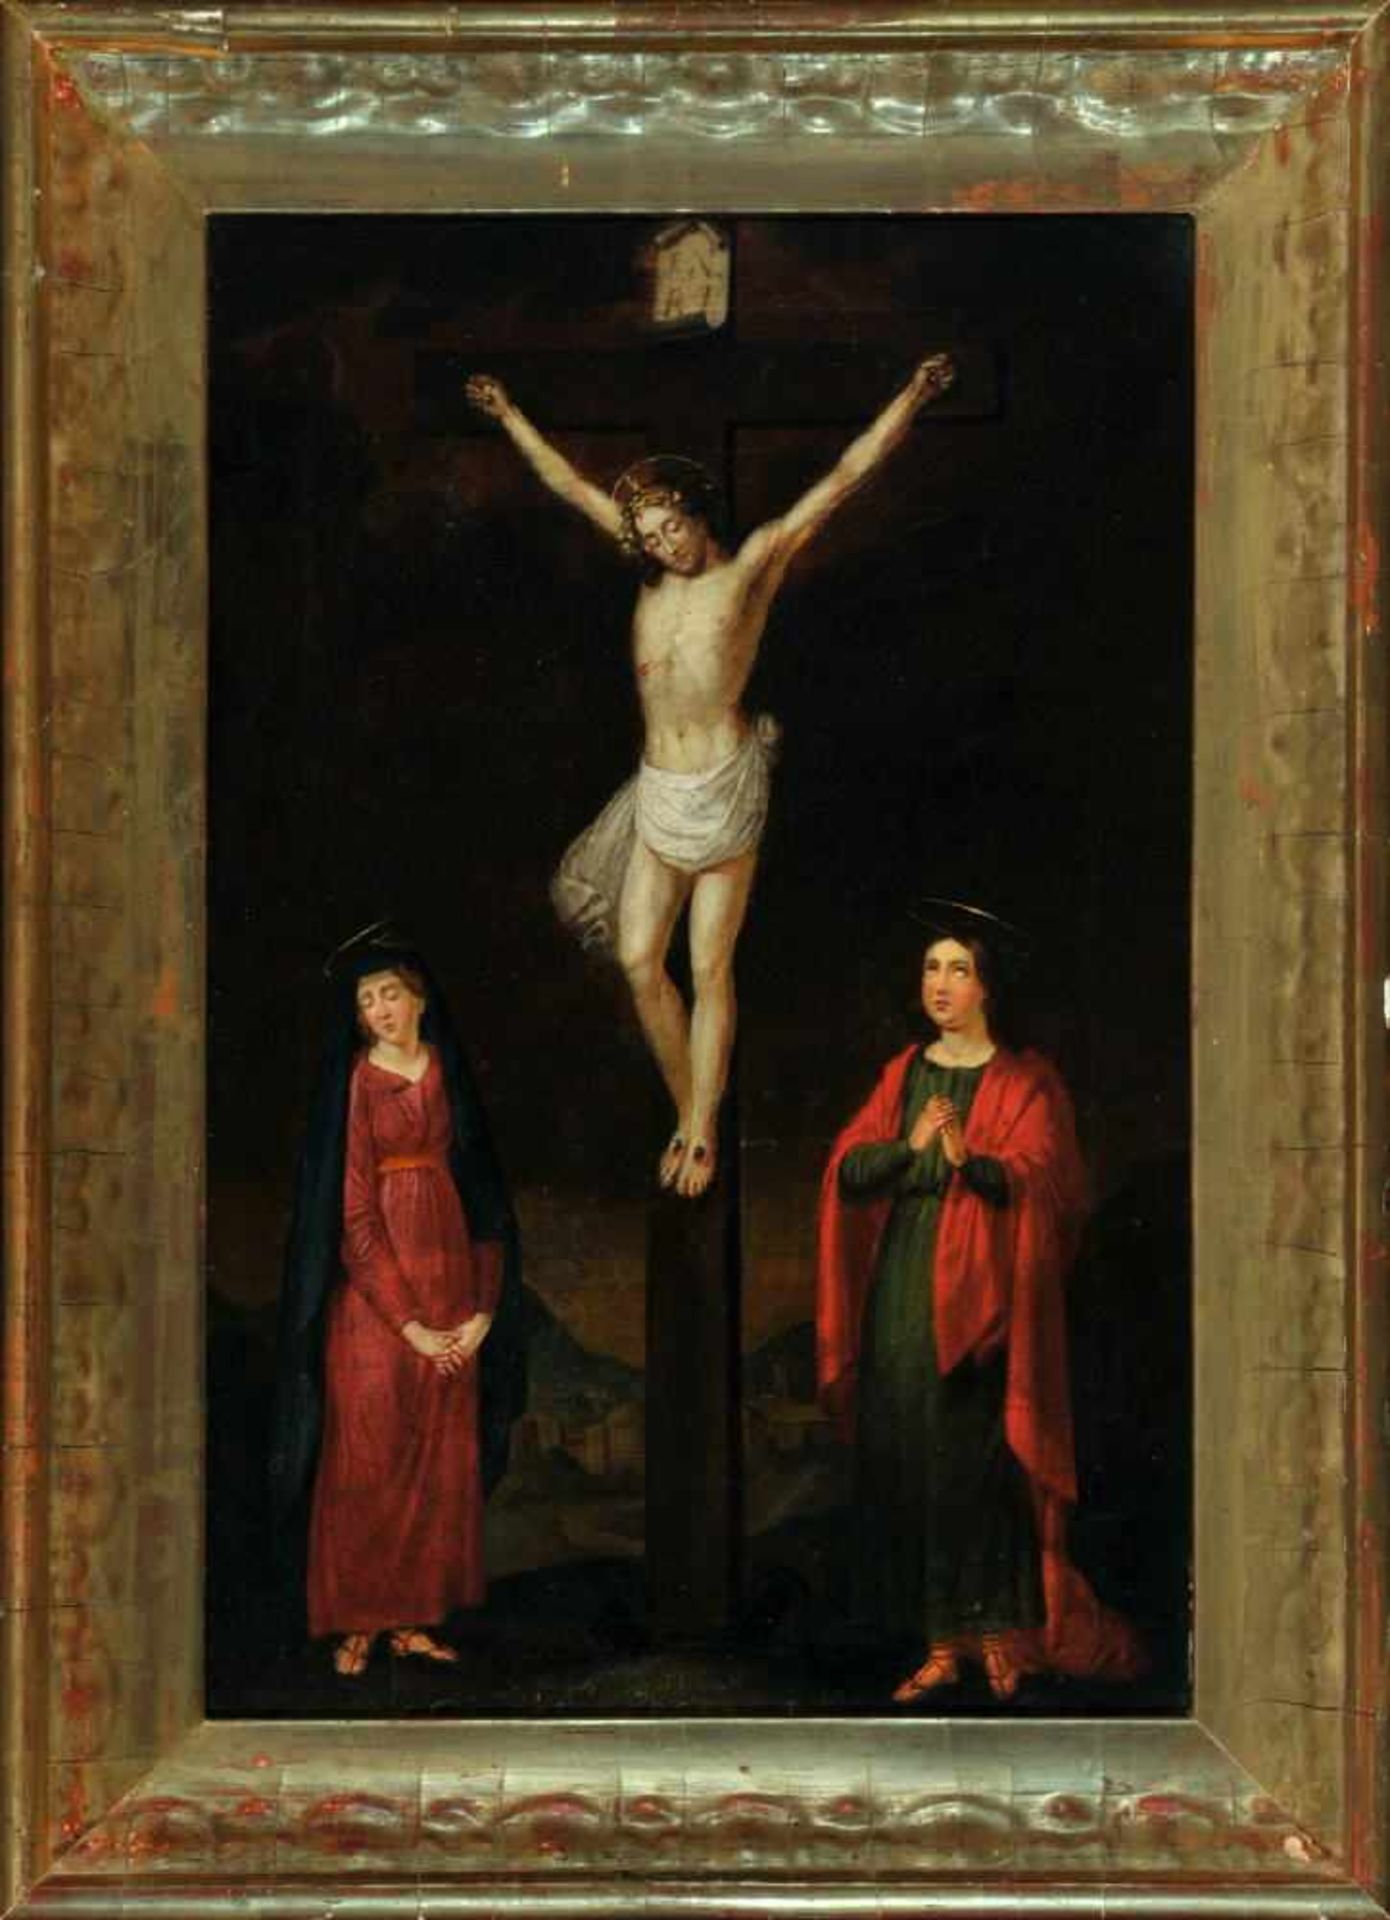 Bildnismaler des 18. Jh.Öl/Lwd, doubl., 49,5 x 33 cm, " Kreuzigungsszene "